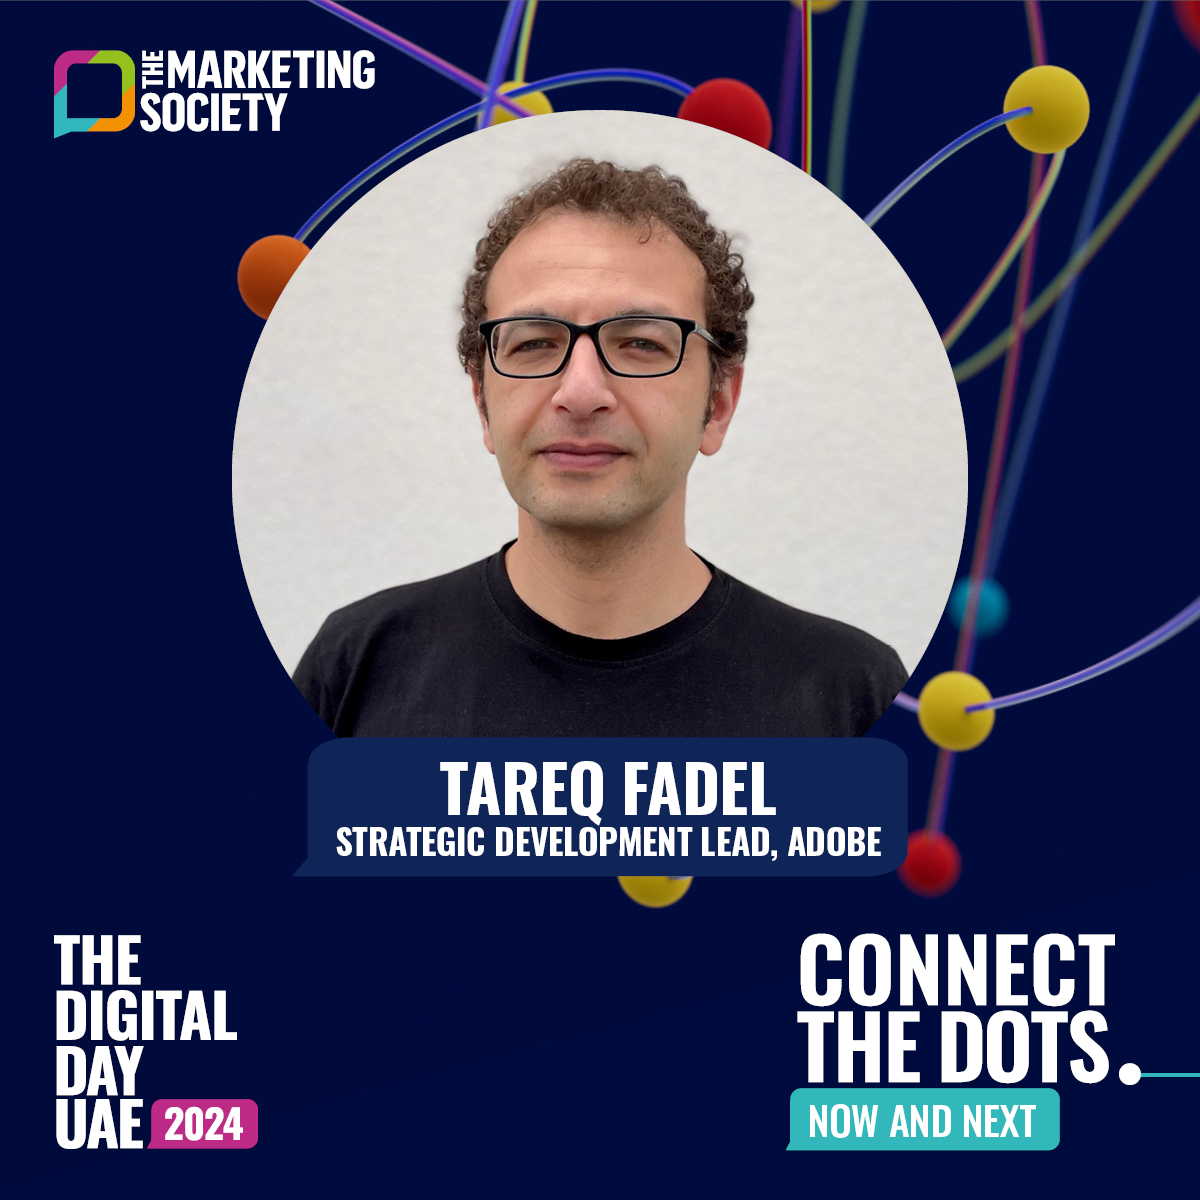 Tareq Fadel